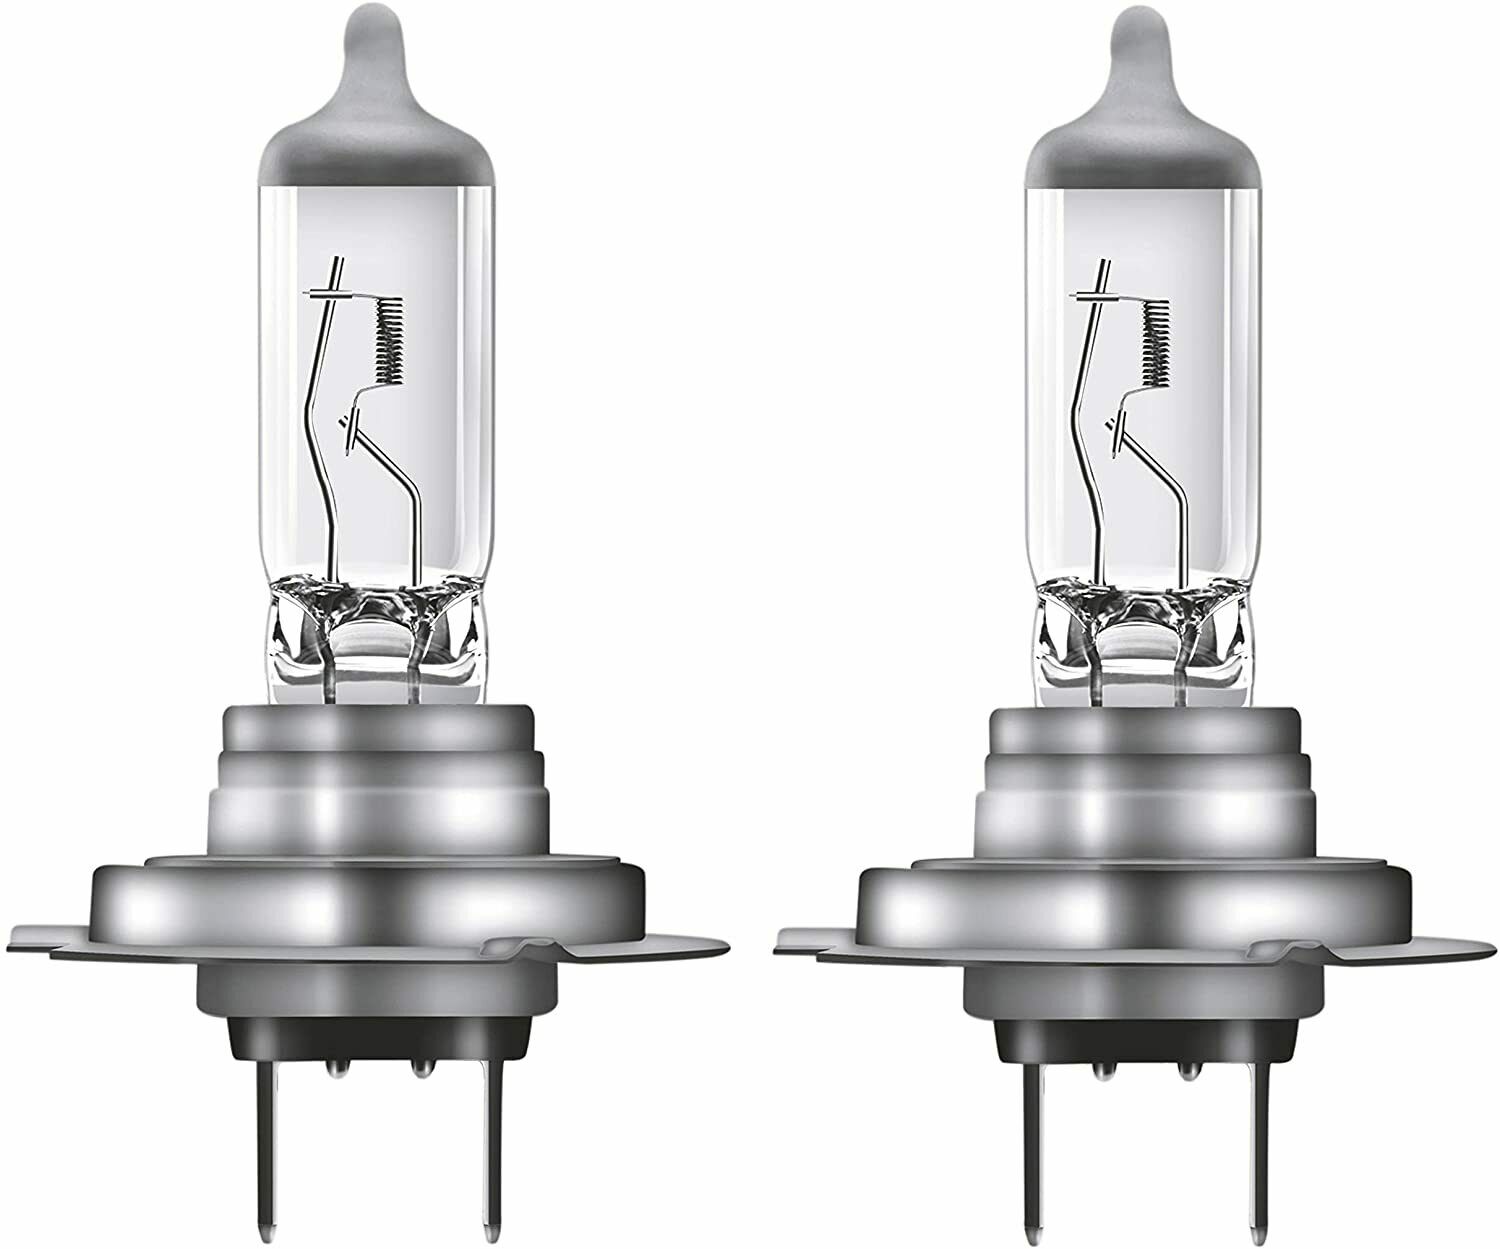 2x Osram H7 64210CLC Classic Lampe 12V 55W Glühlampen Birnen Autolampe –  Kummert Business eCommerce